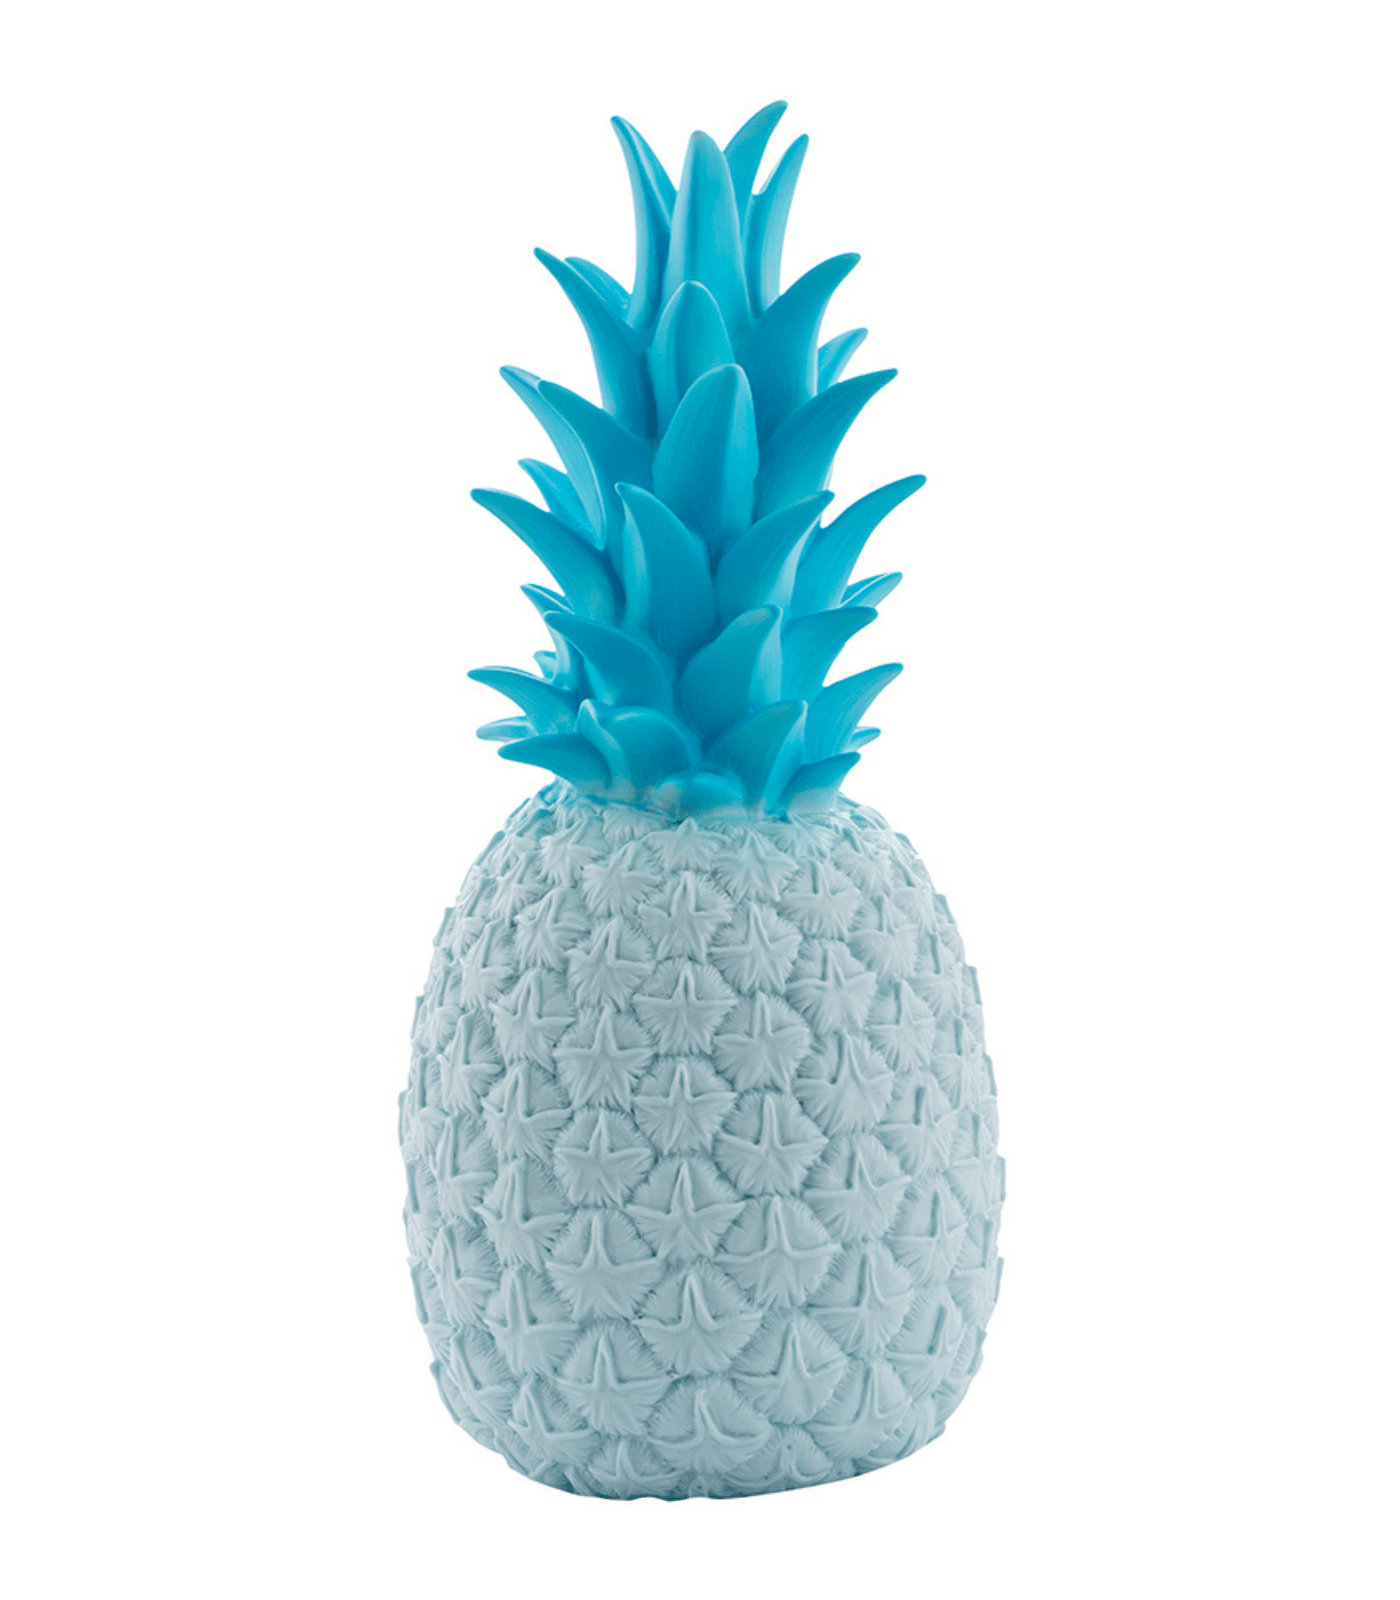 Pineapple - I LOVE DESIGN